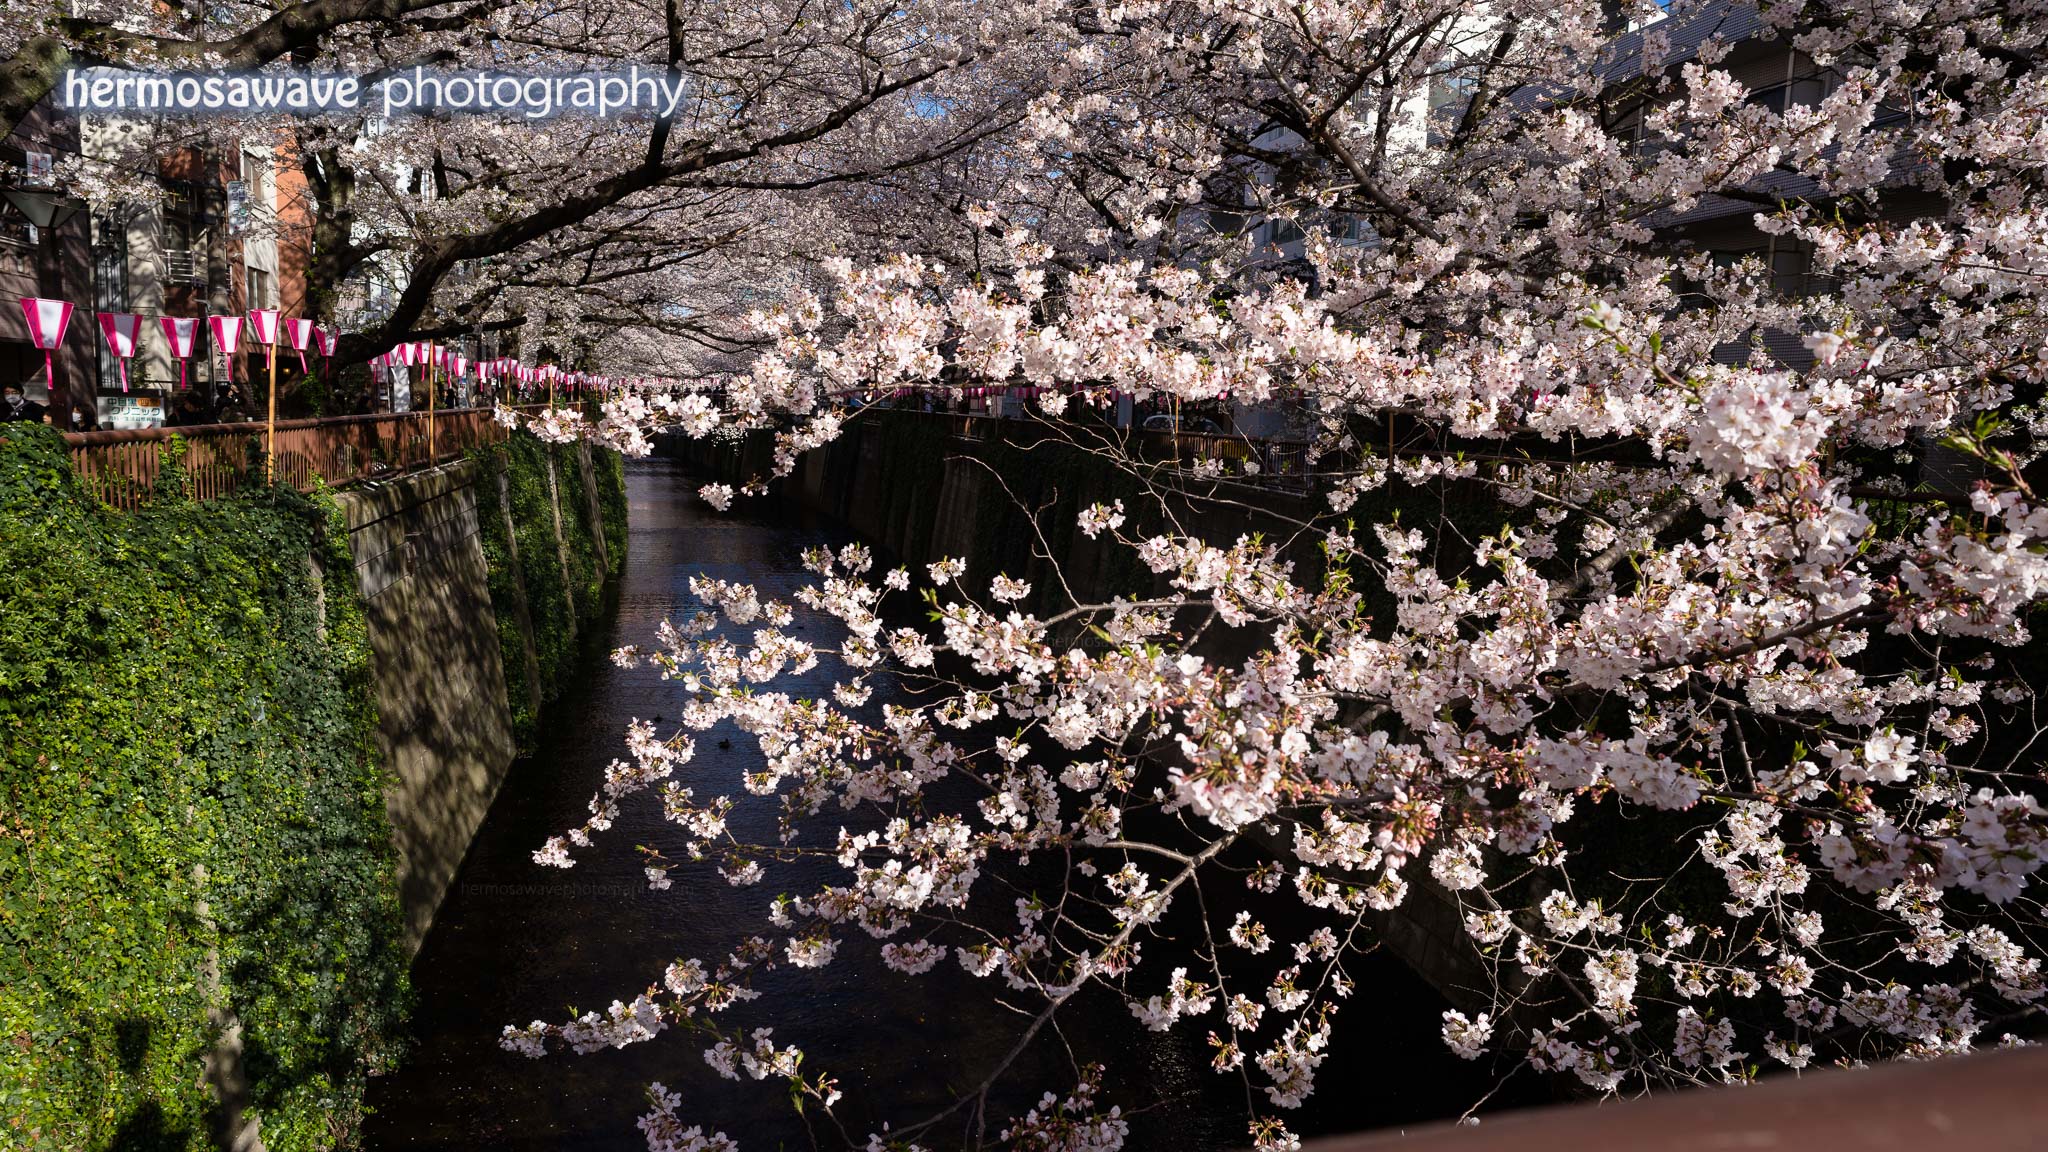 More Sakura from Naka Meguro